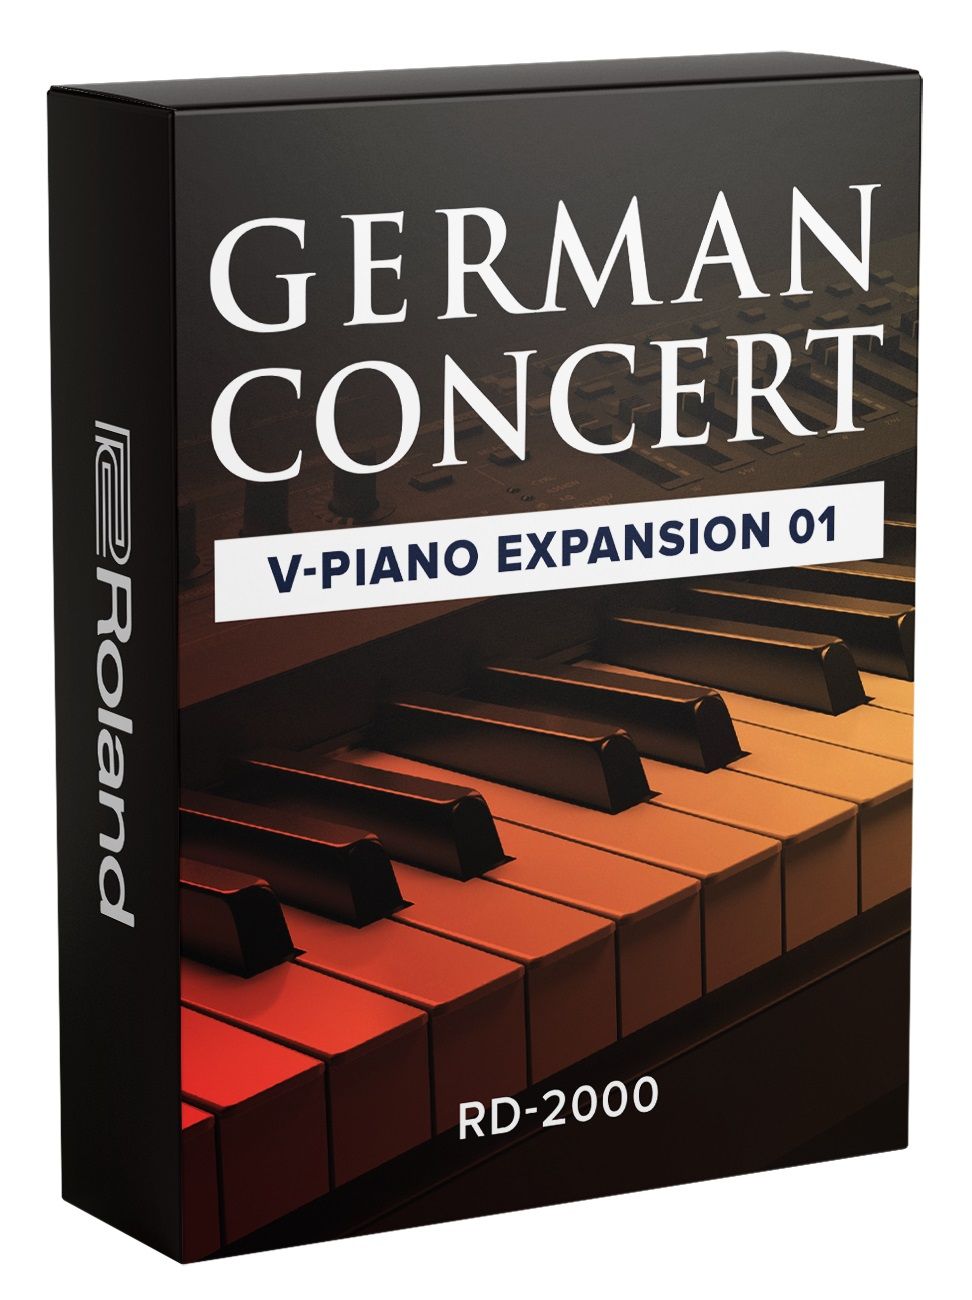 Roland V-Piano Expansion 01 German Concert